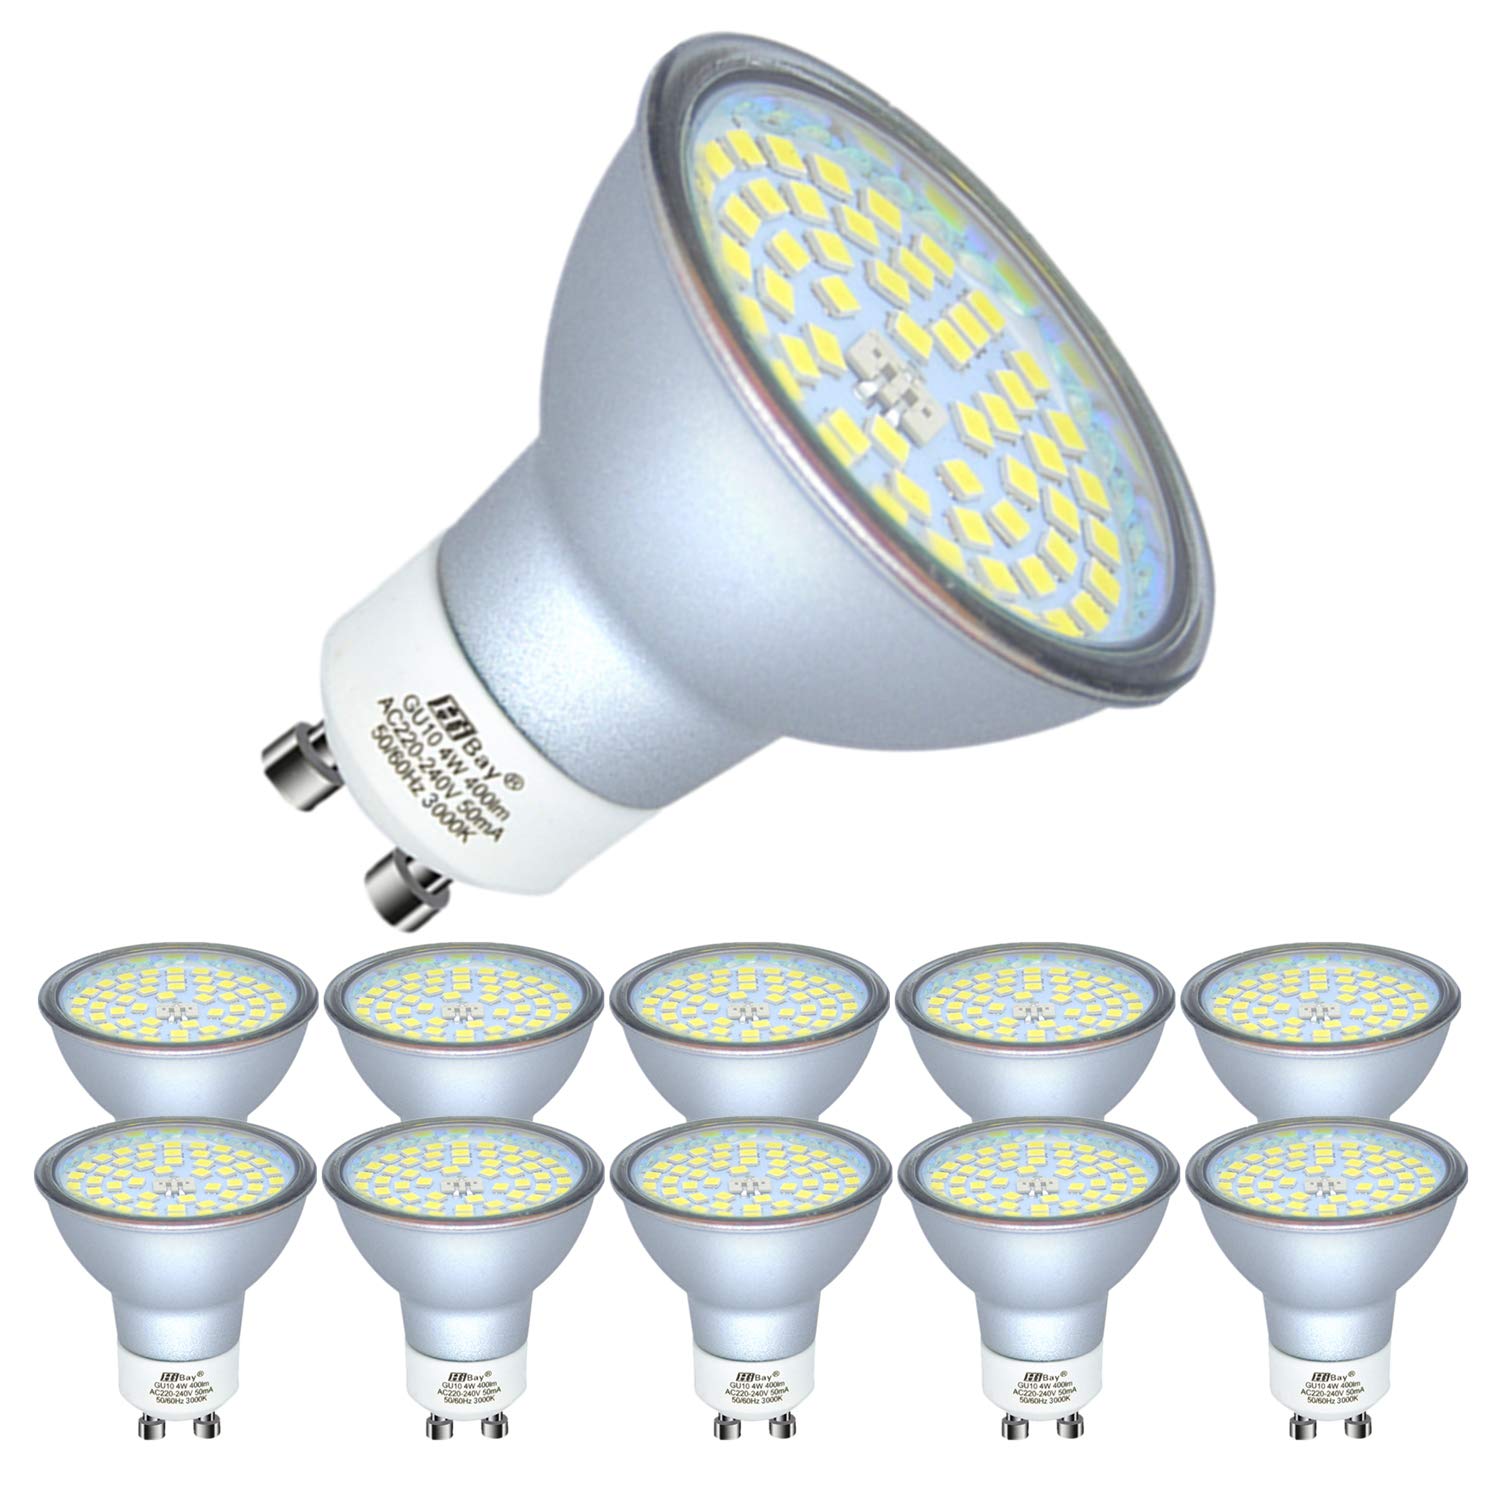 10x 4W GU10 LED Bulbs Cool White Spot Lights Replace 35W Halogen 6000K 240V for Ceiling Spotlight Downlight Fitting